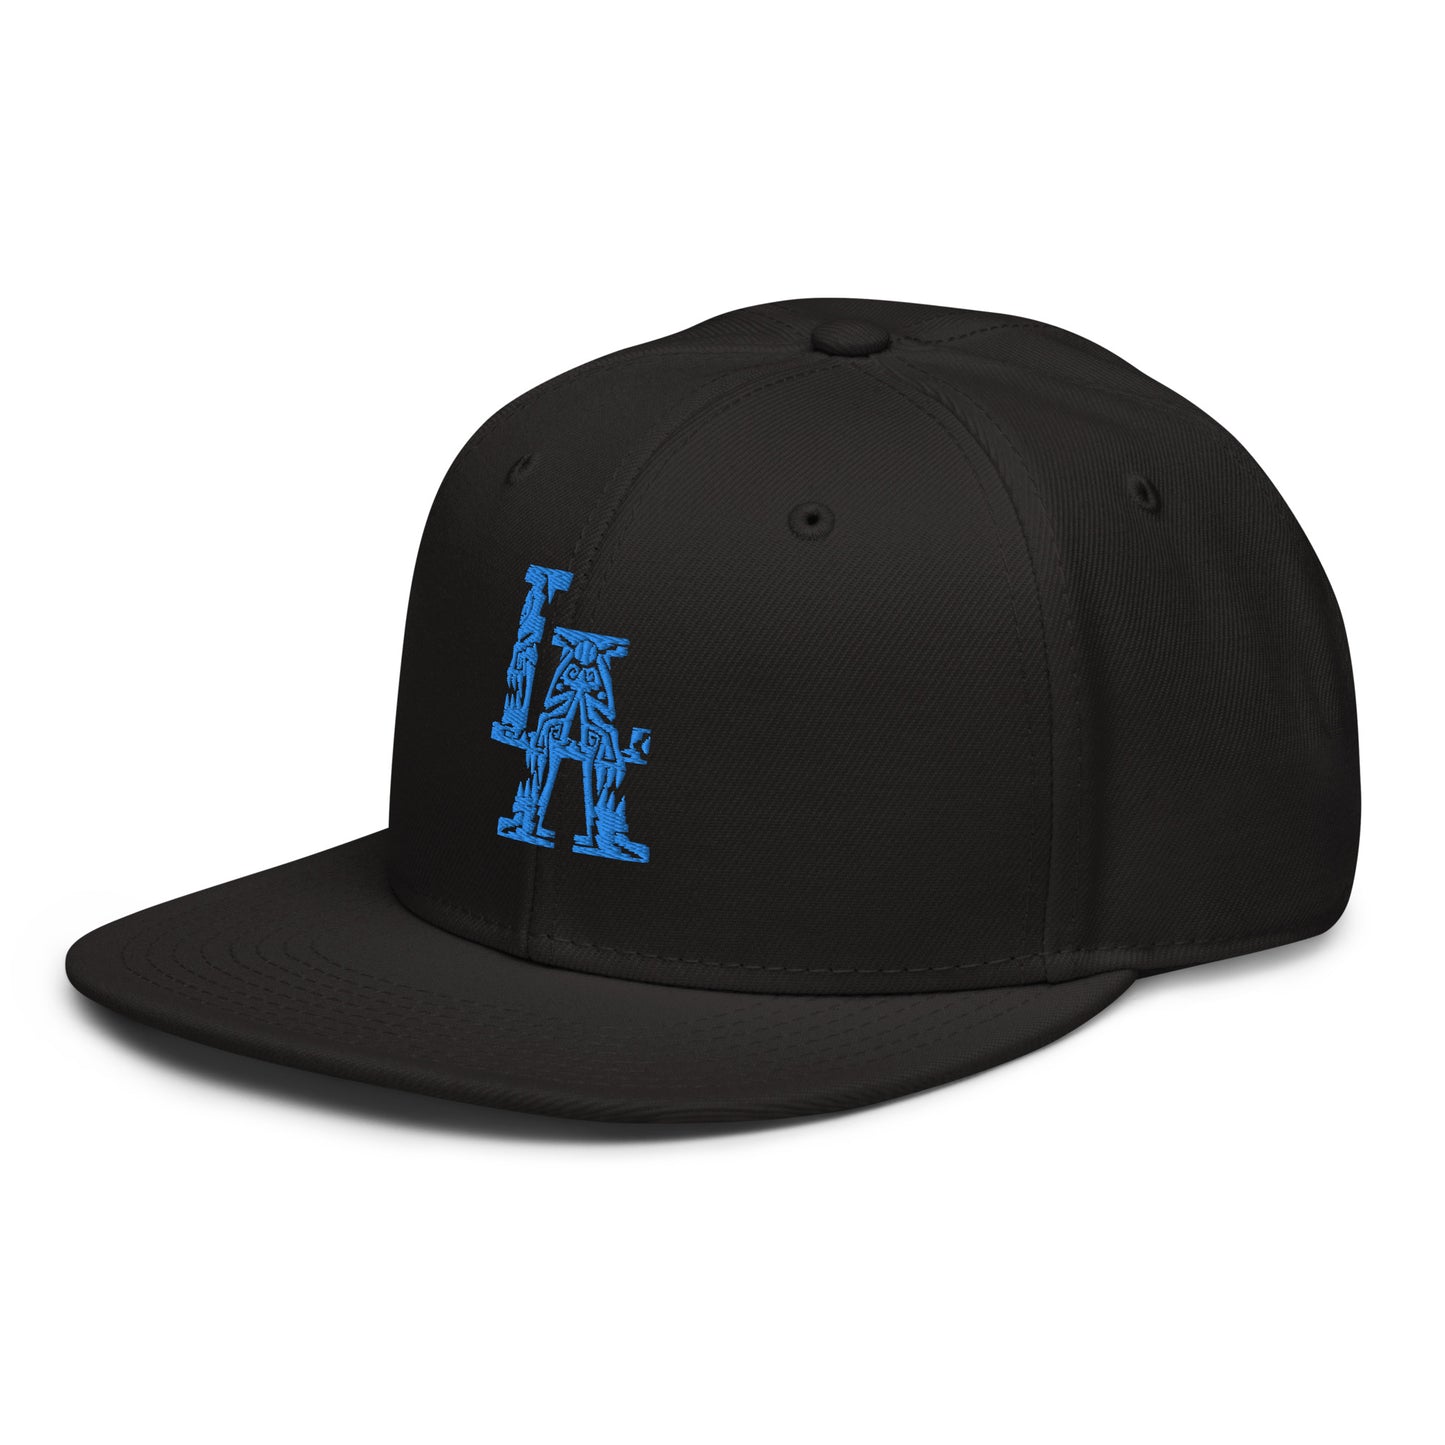 LA Blue Snapback Hat